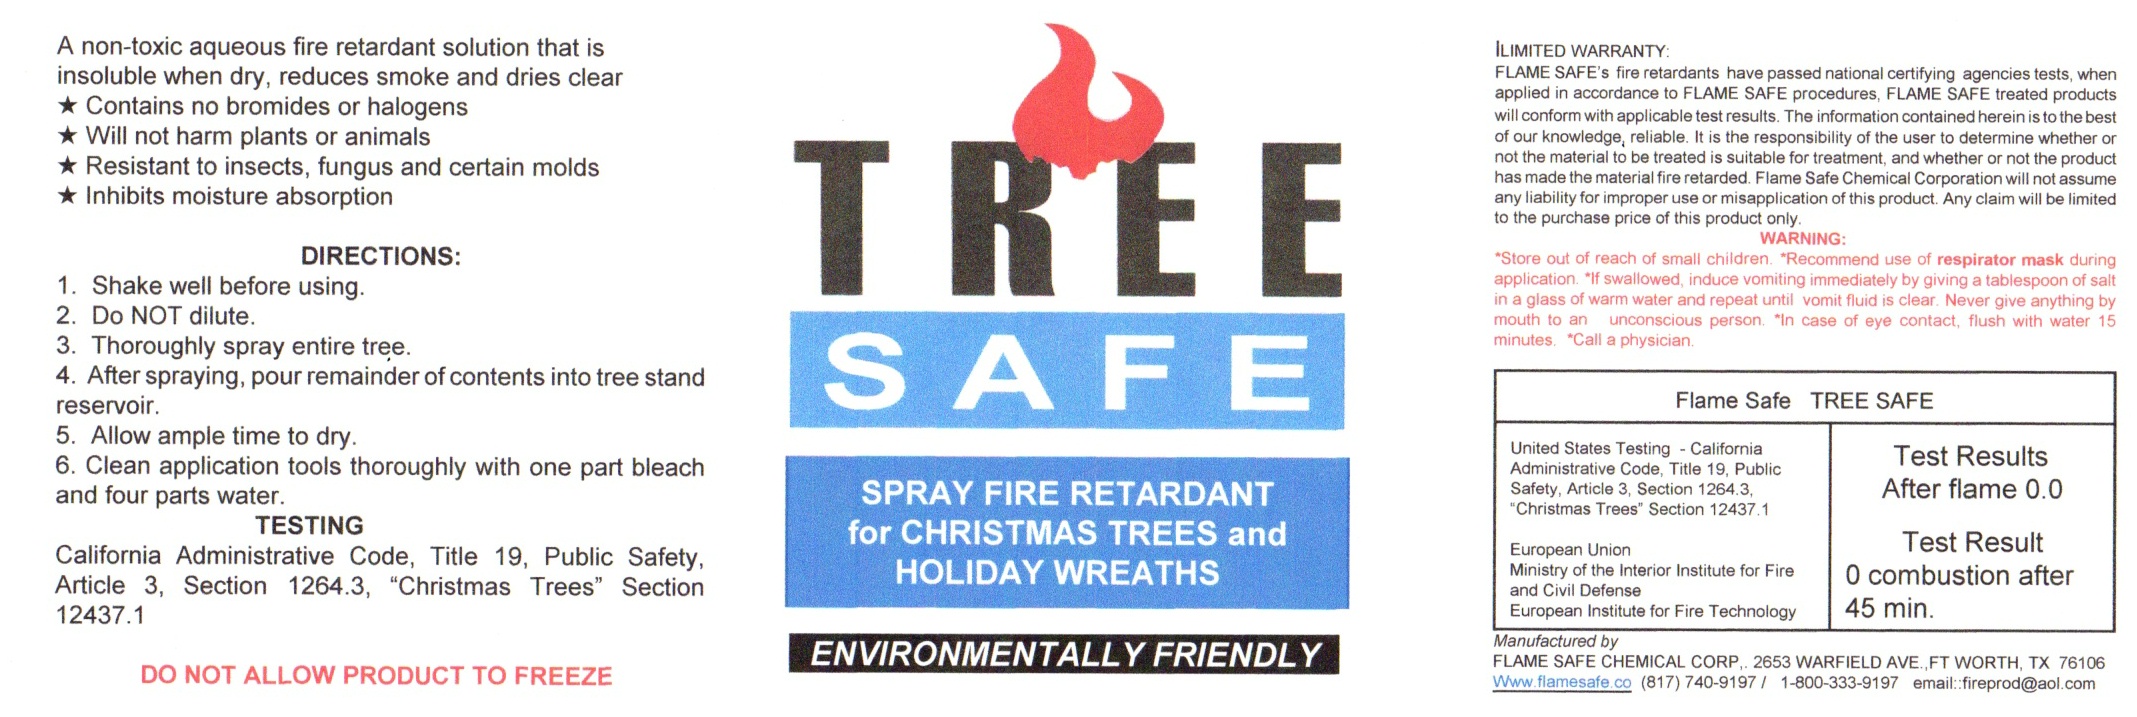 Fire retardant for Christmas Trees